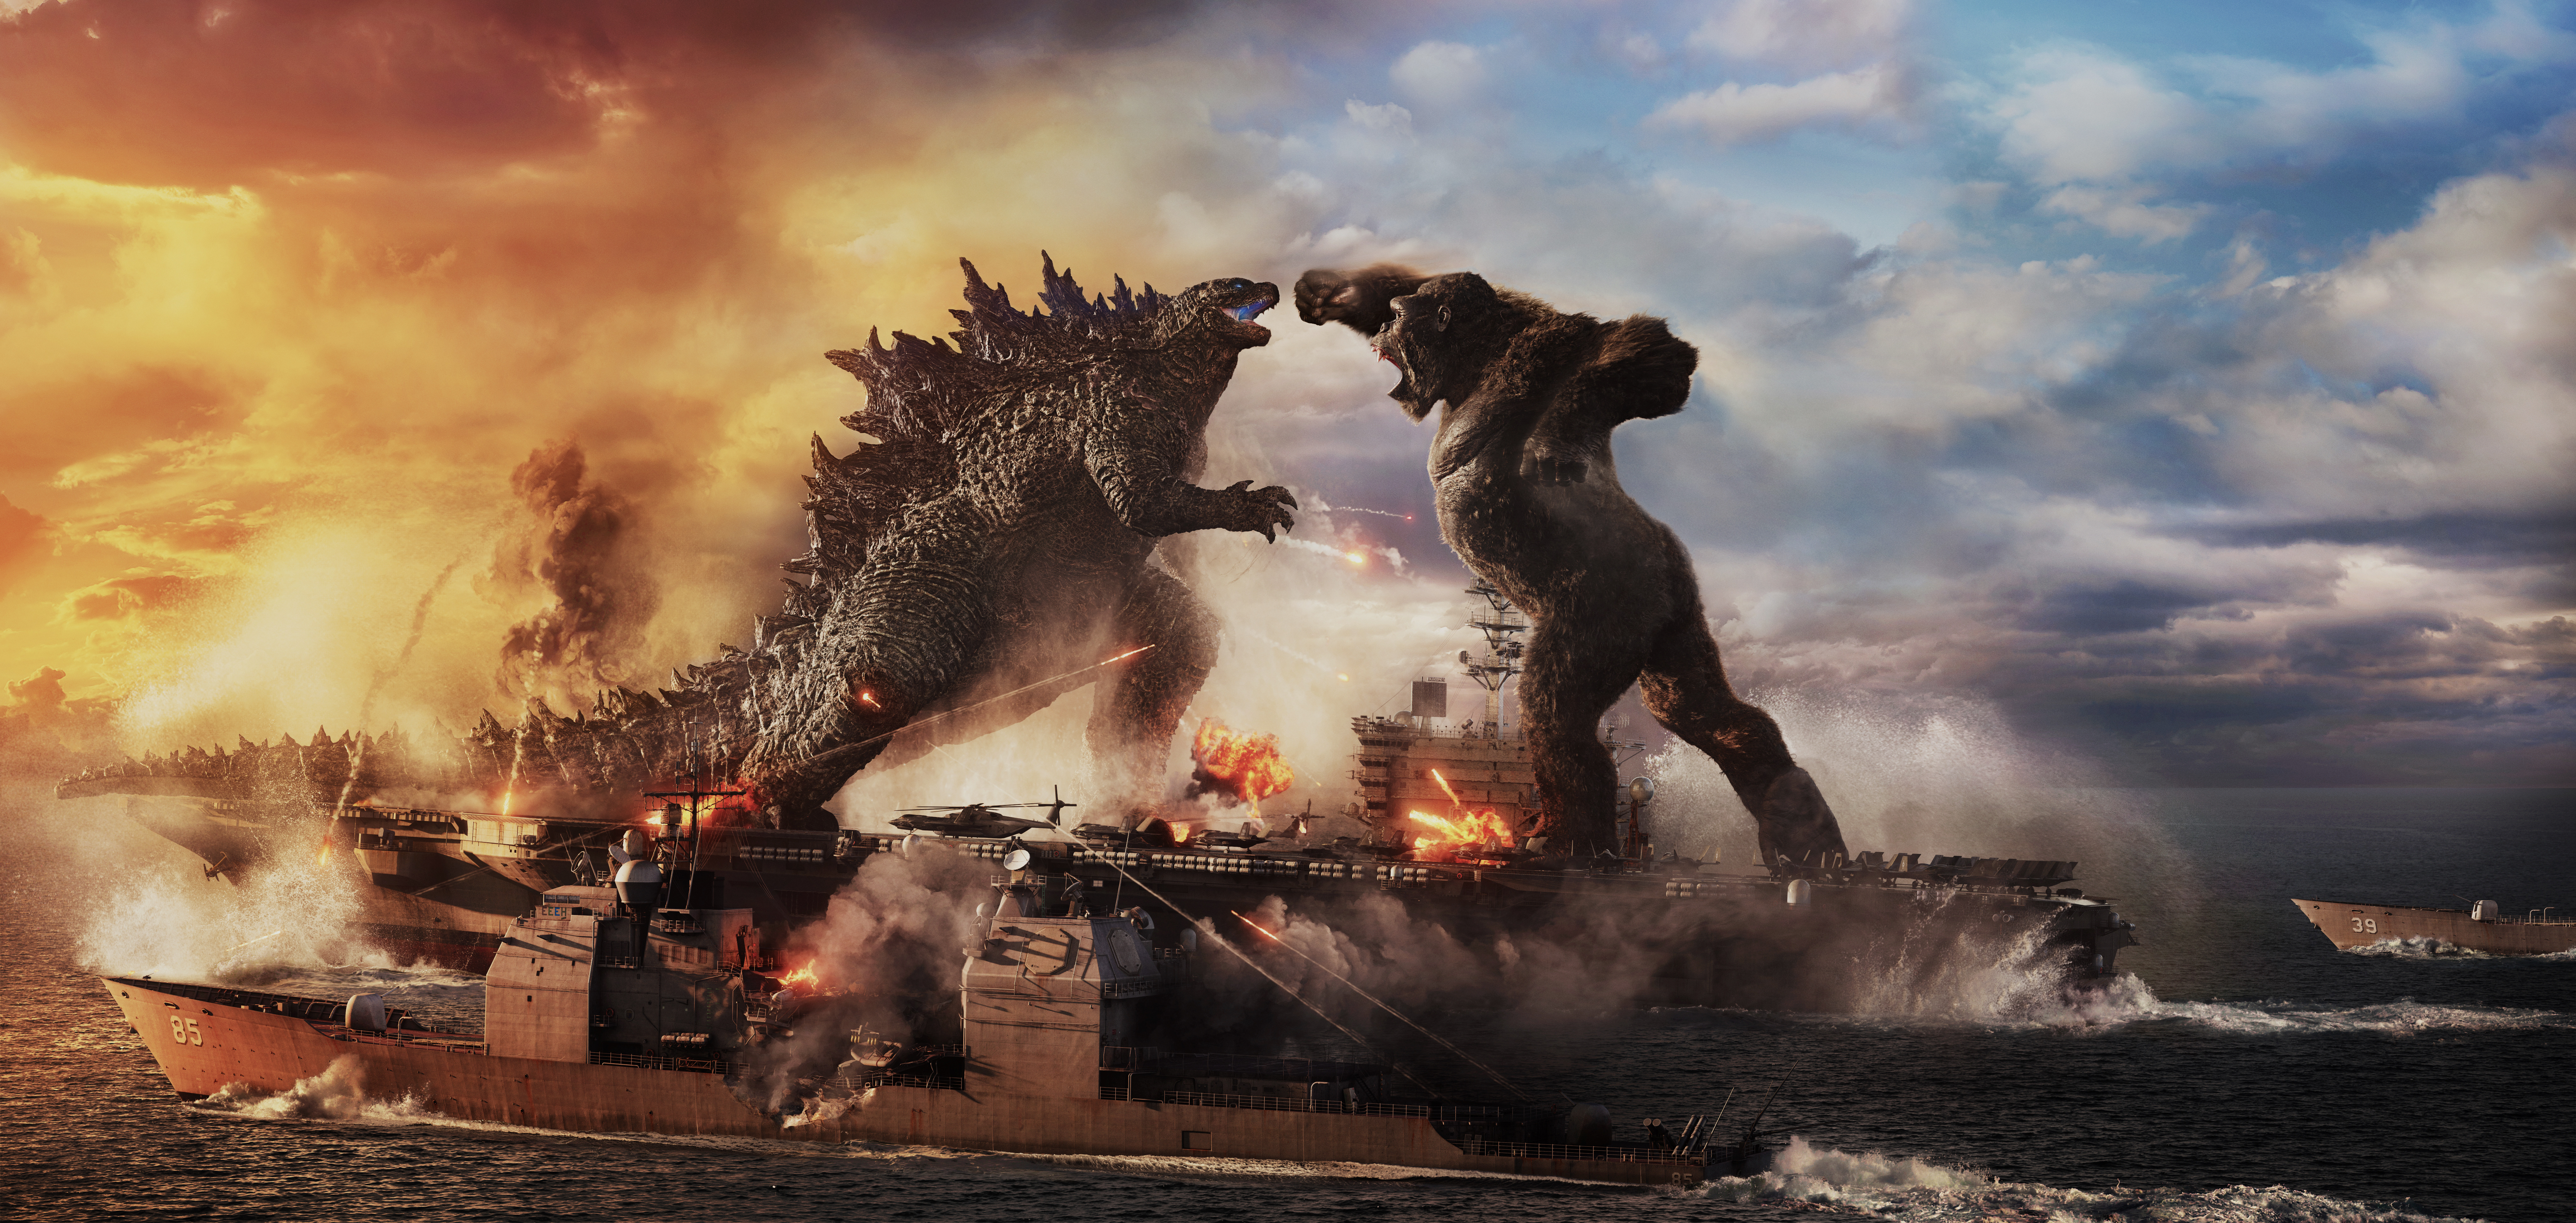 Twitter Reacts To The Epic Showdown Between Godzilla & King Kong